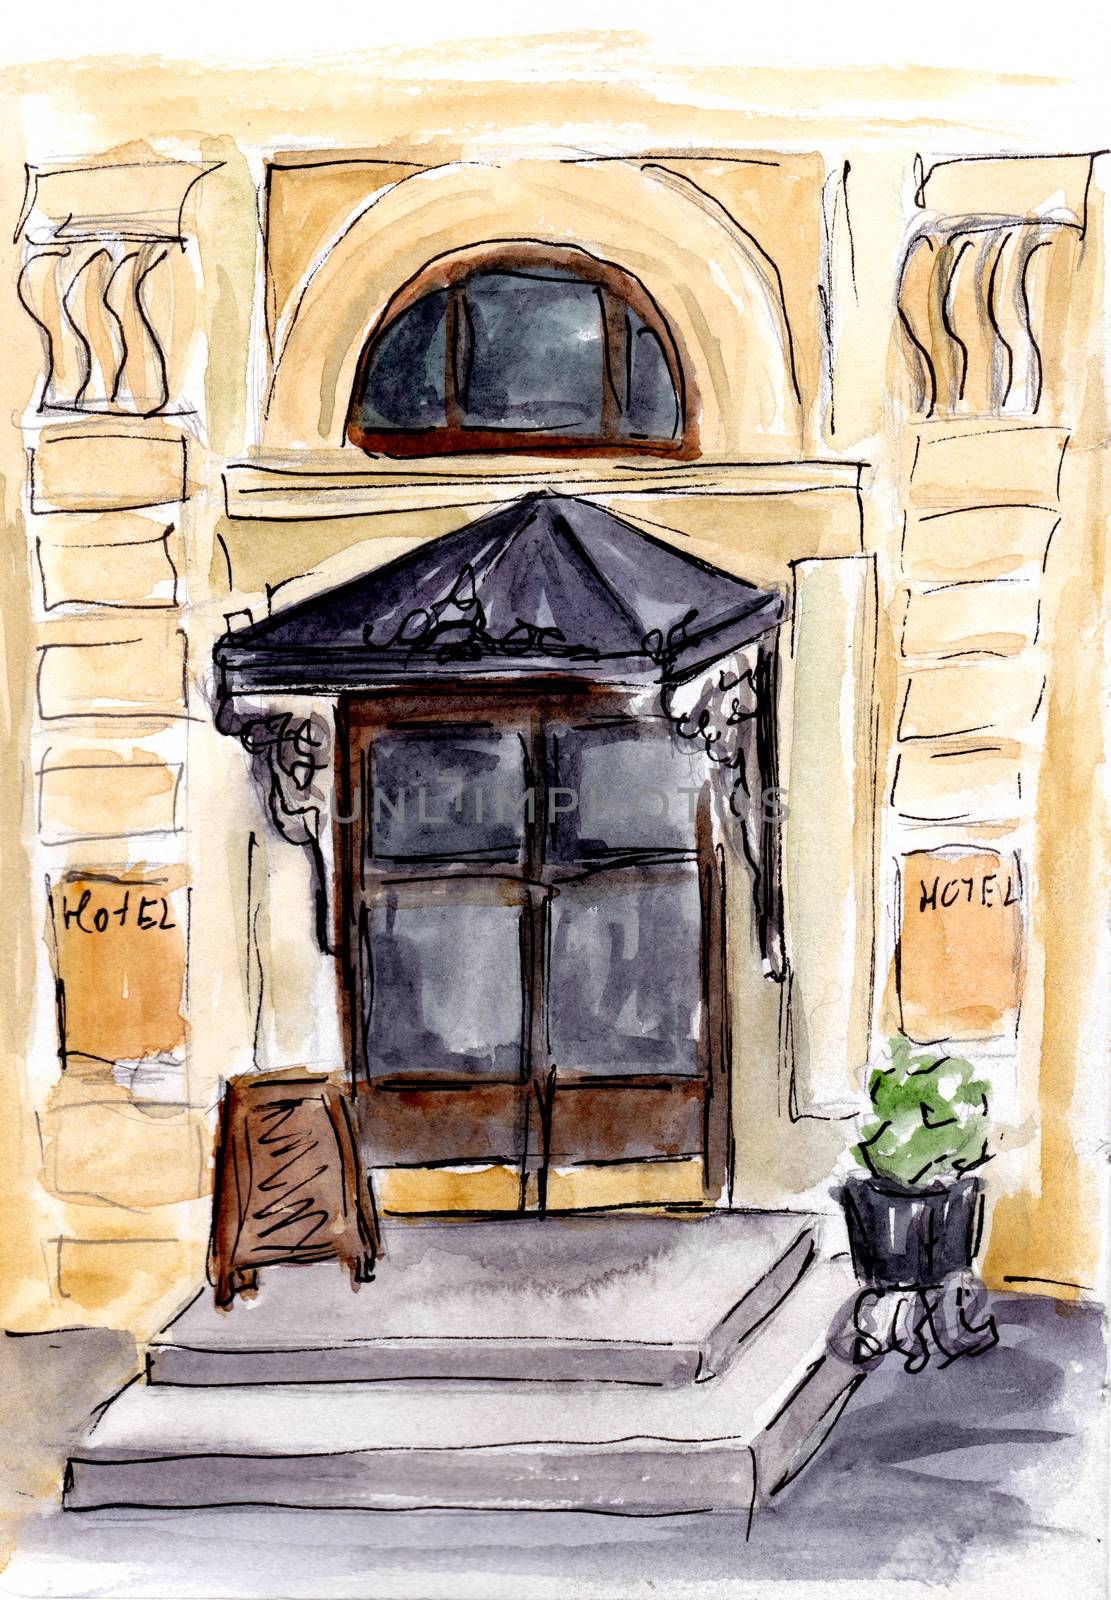 Watercolor sketch of hotel doorway. Hand-drawn illustration.